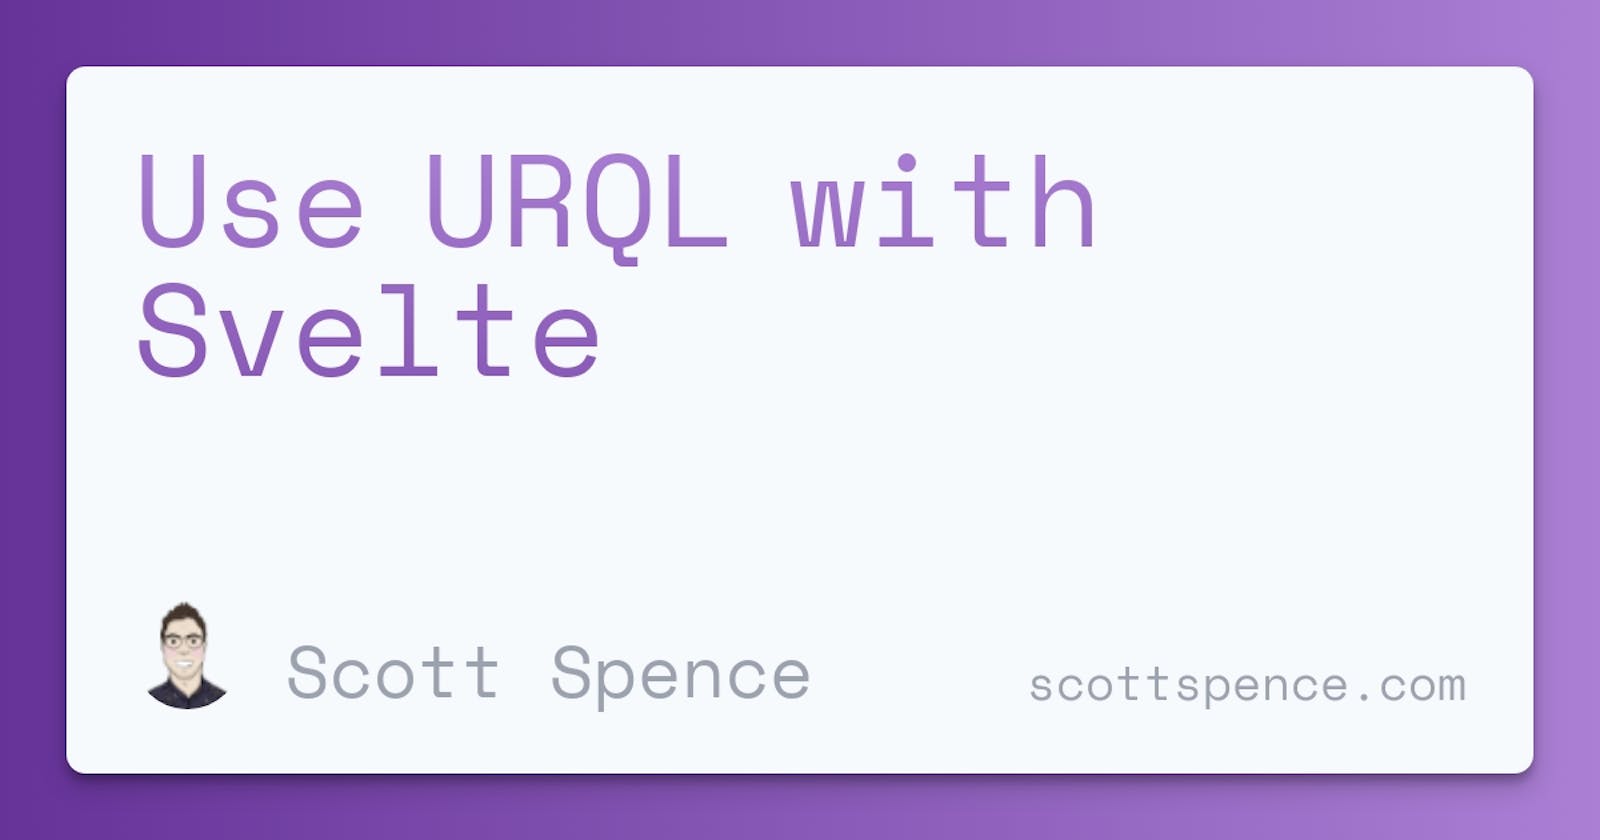 Use URQL with Svelte